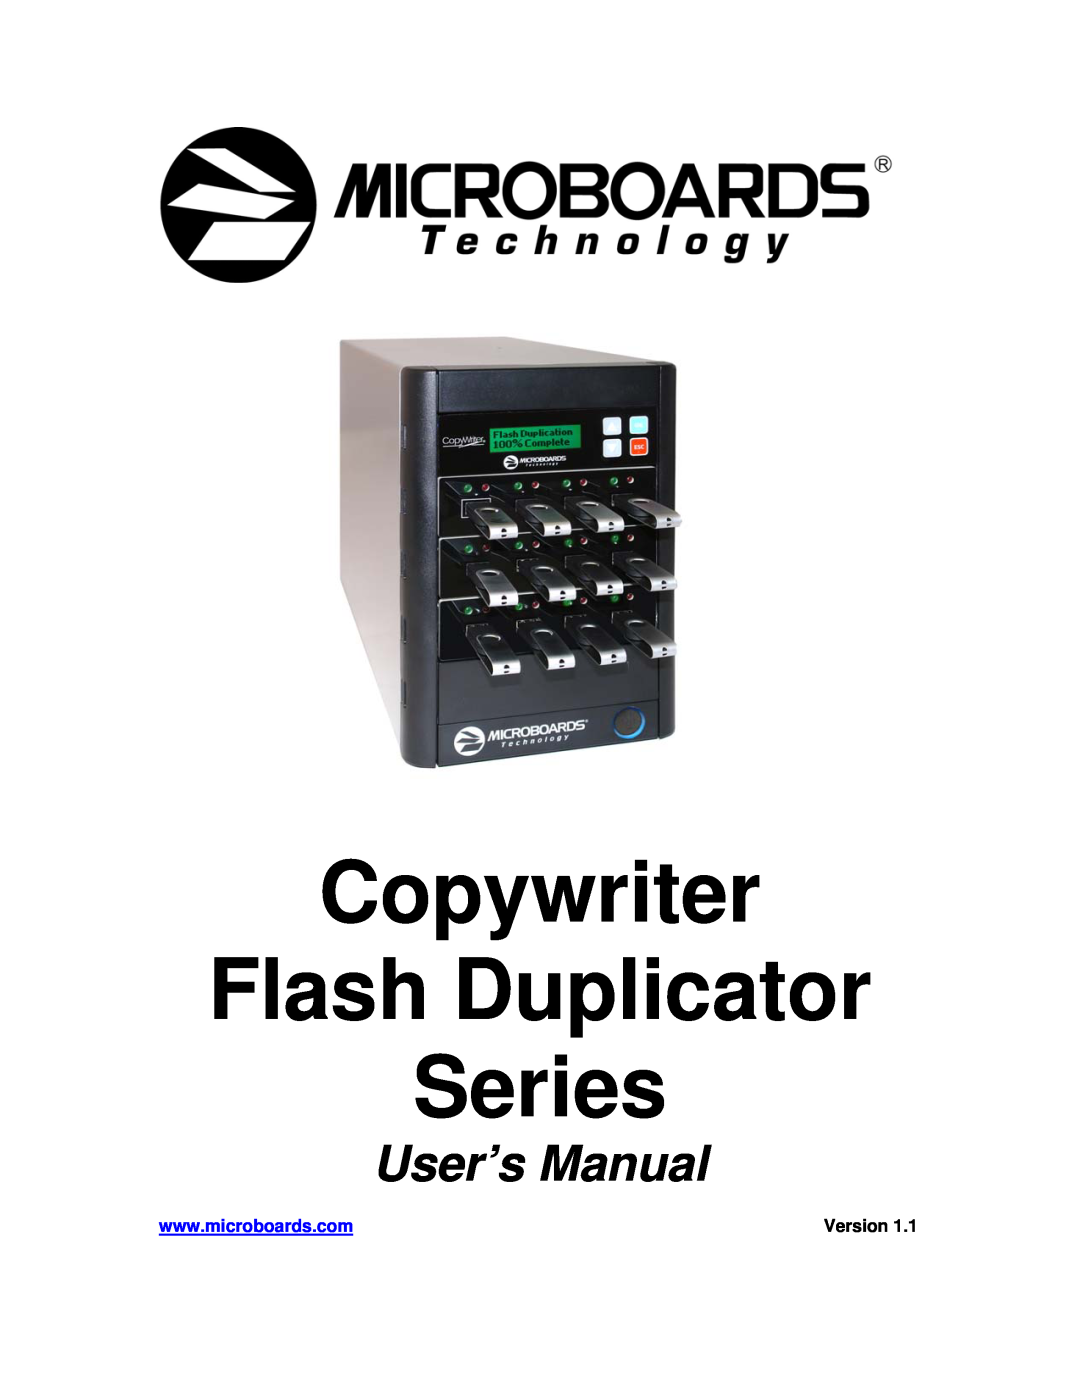 MicroBoards Technology user manual Copywriter Flash Duplicator Series, User’s Manual, Version 